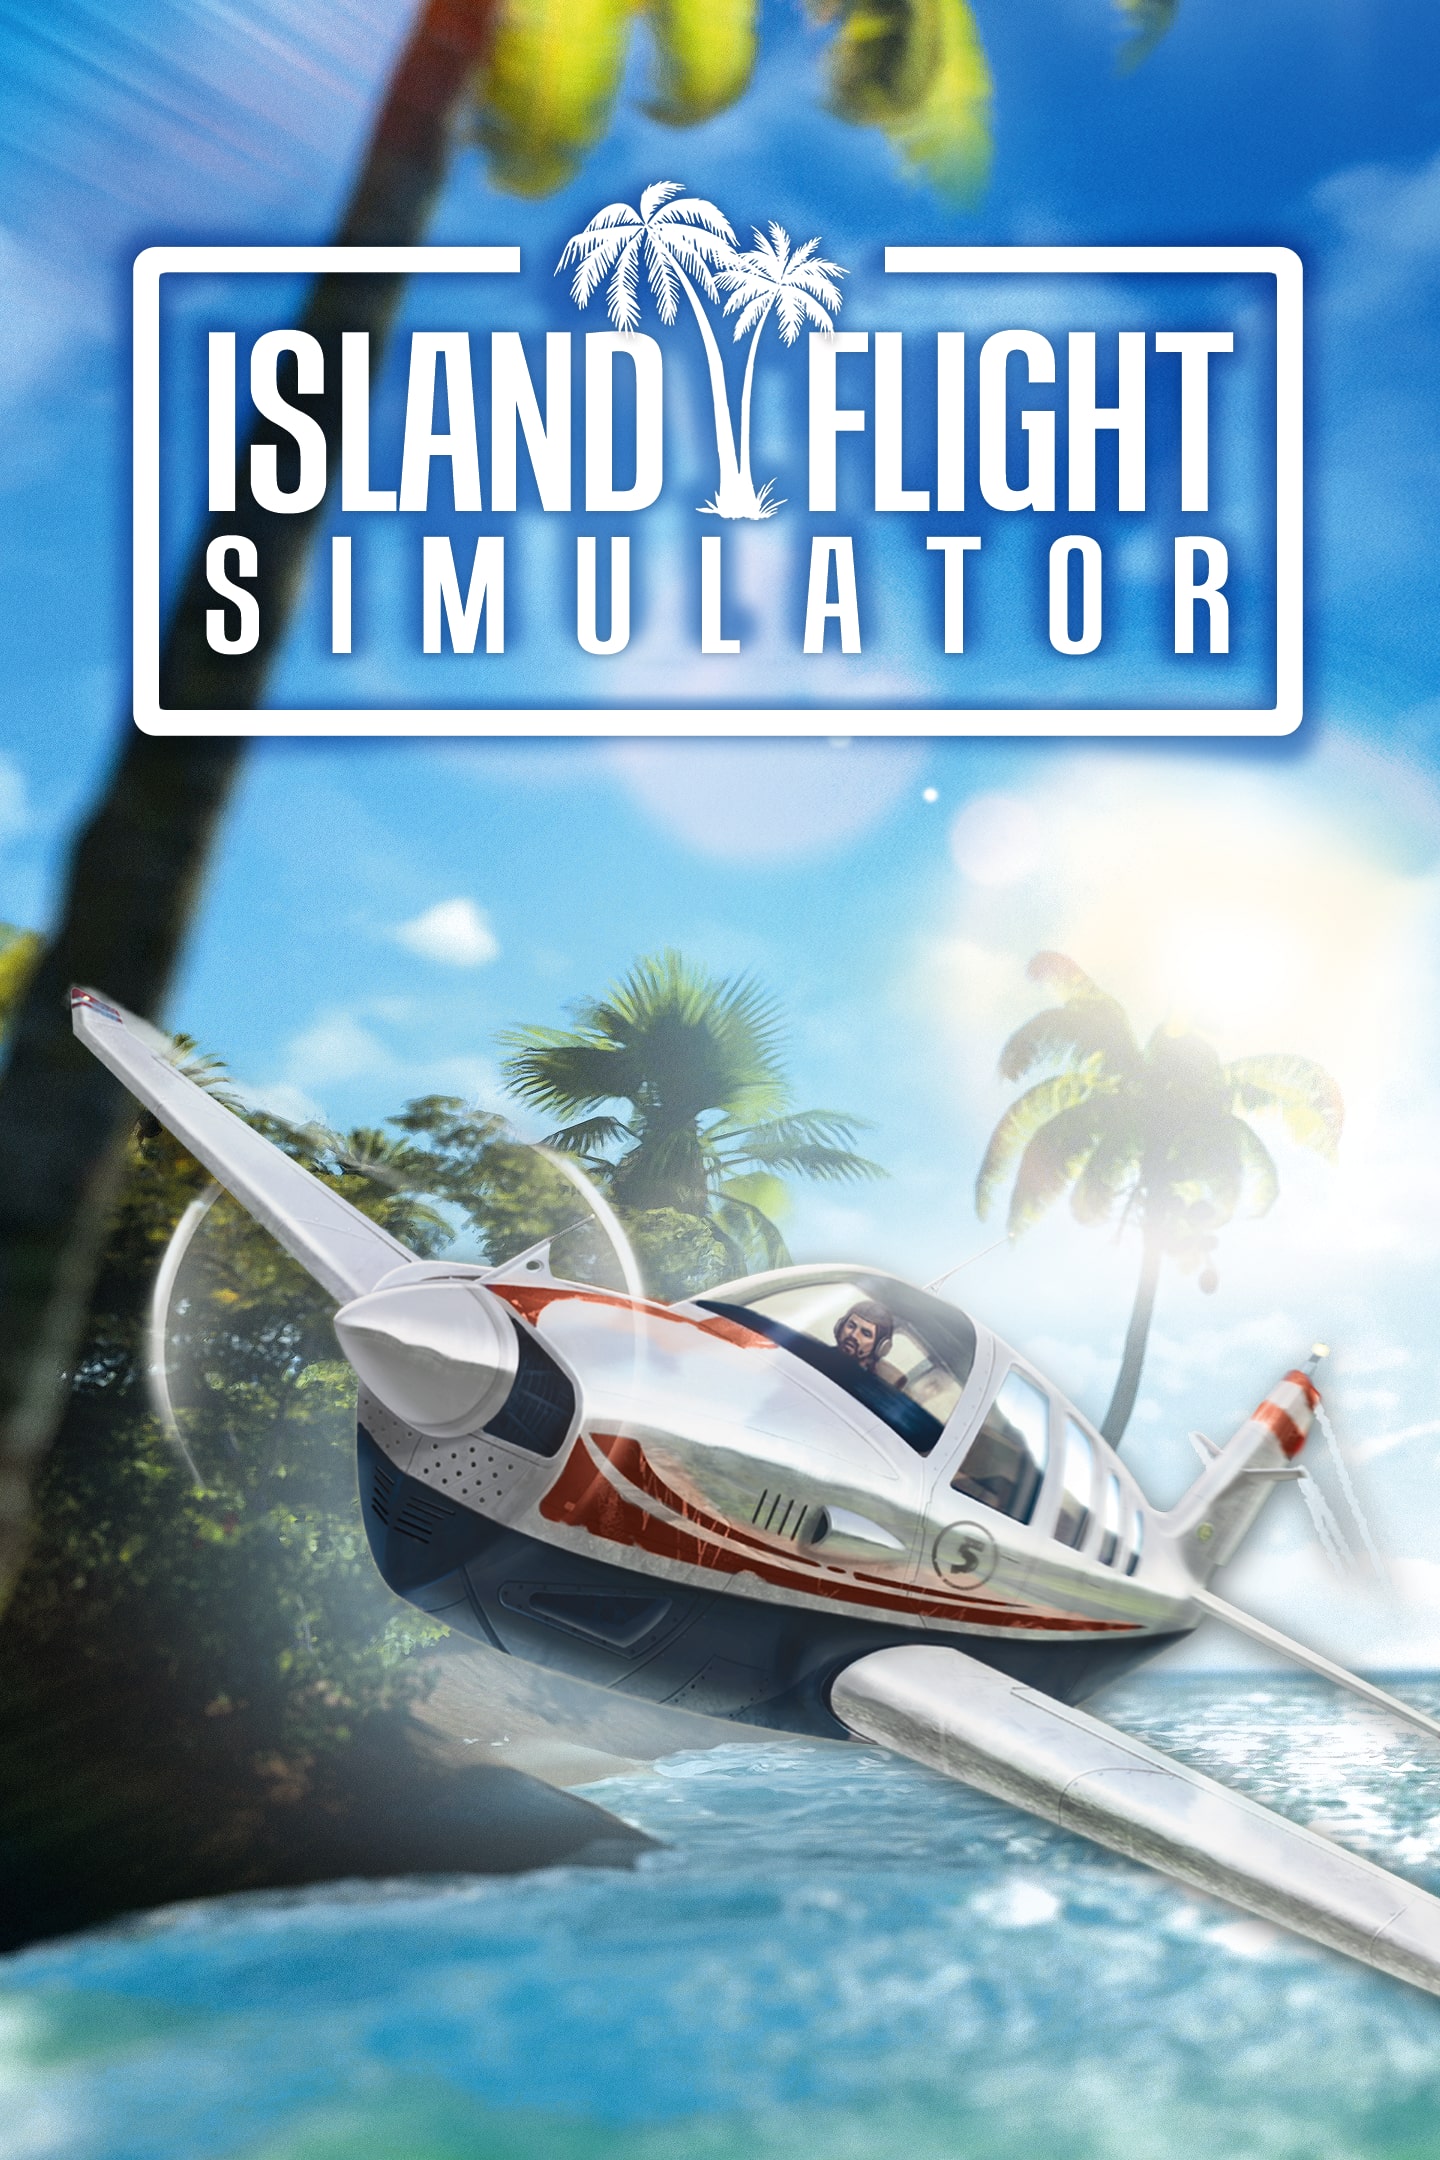 falme terrorist kost Island Flight Simulator